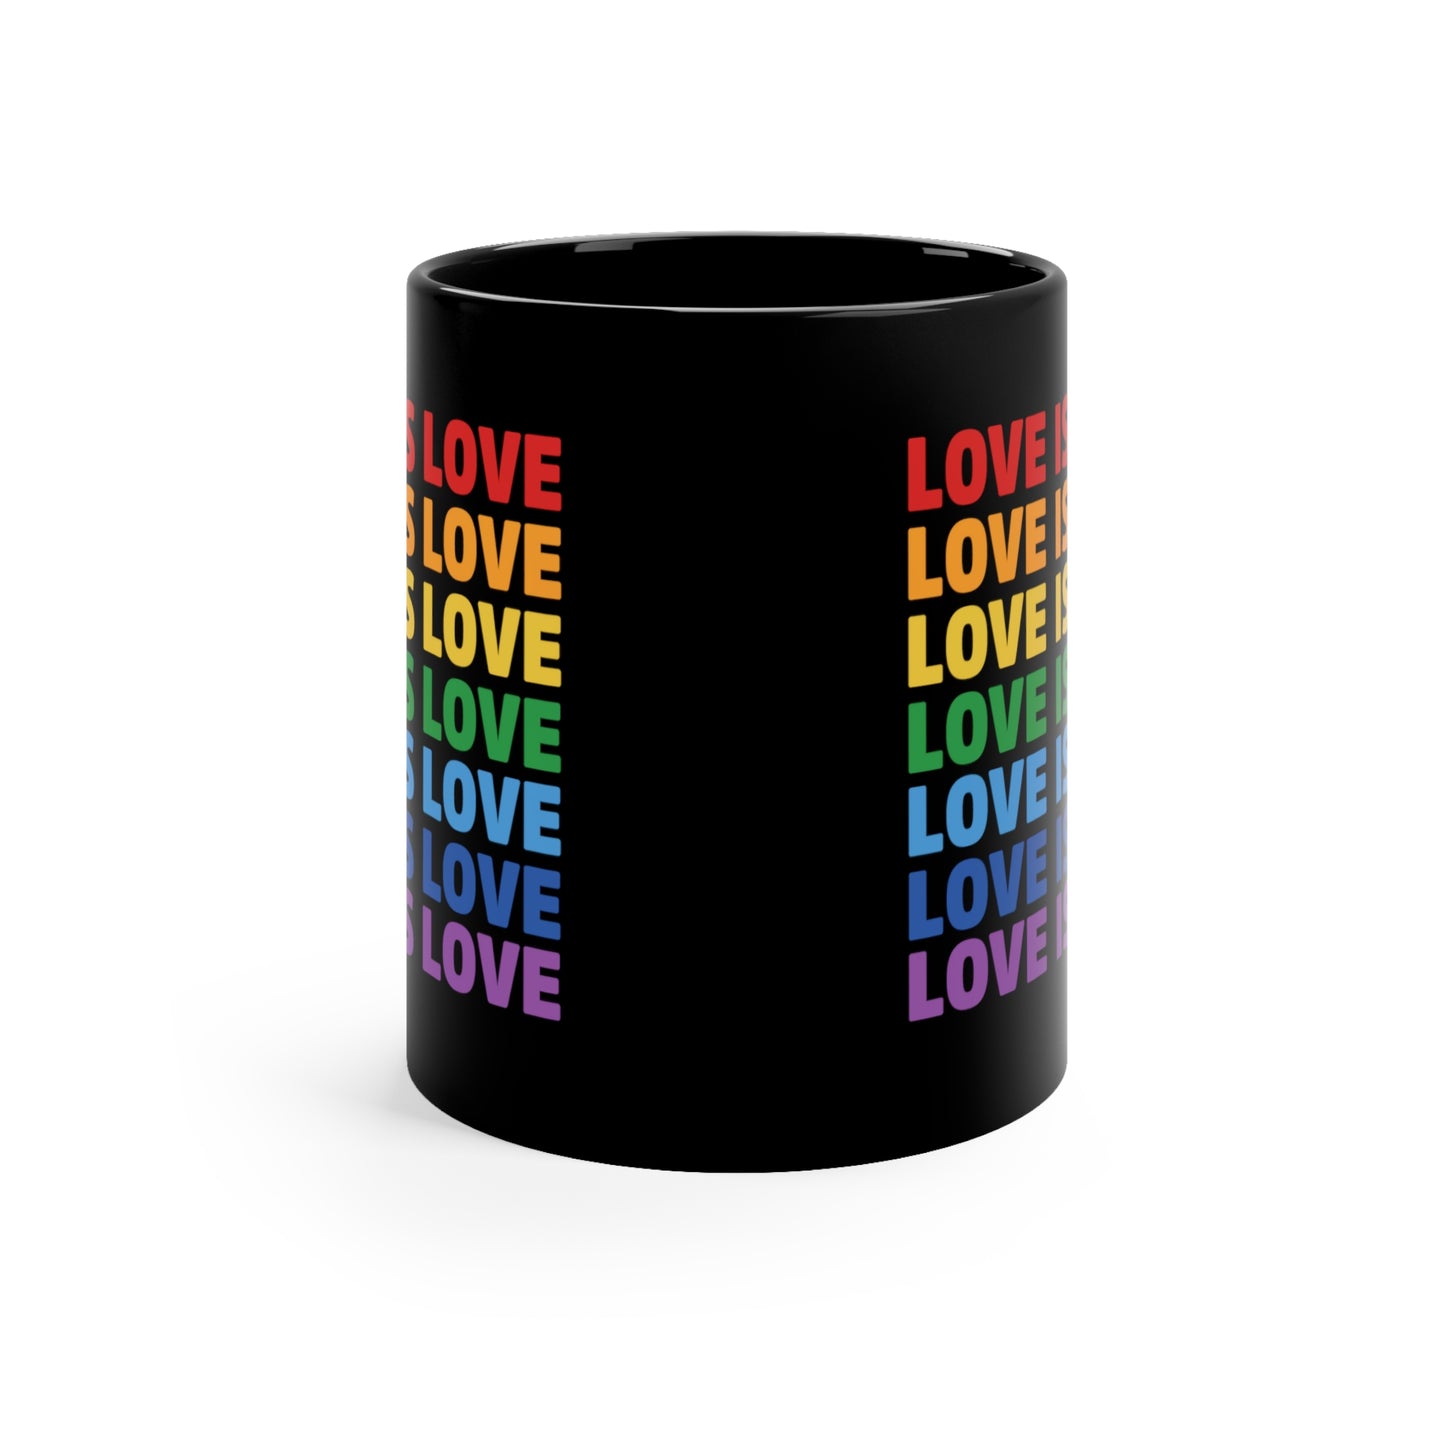 “Love is Love” 11 oz. Mug